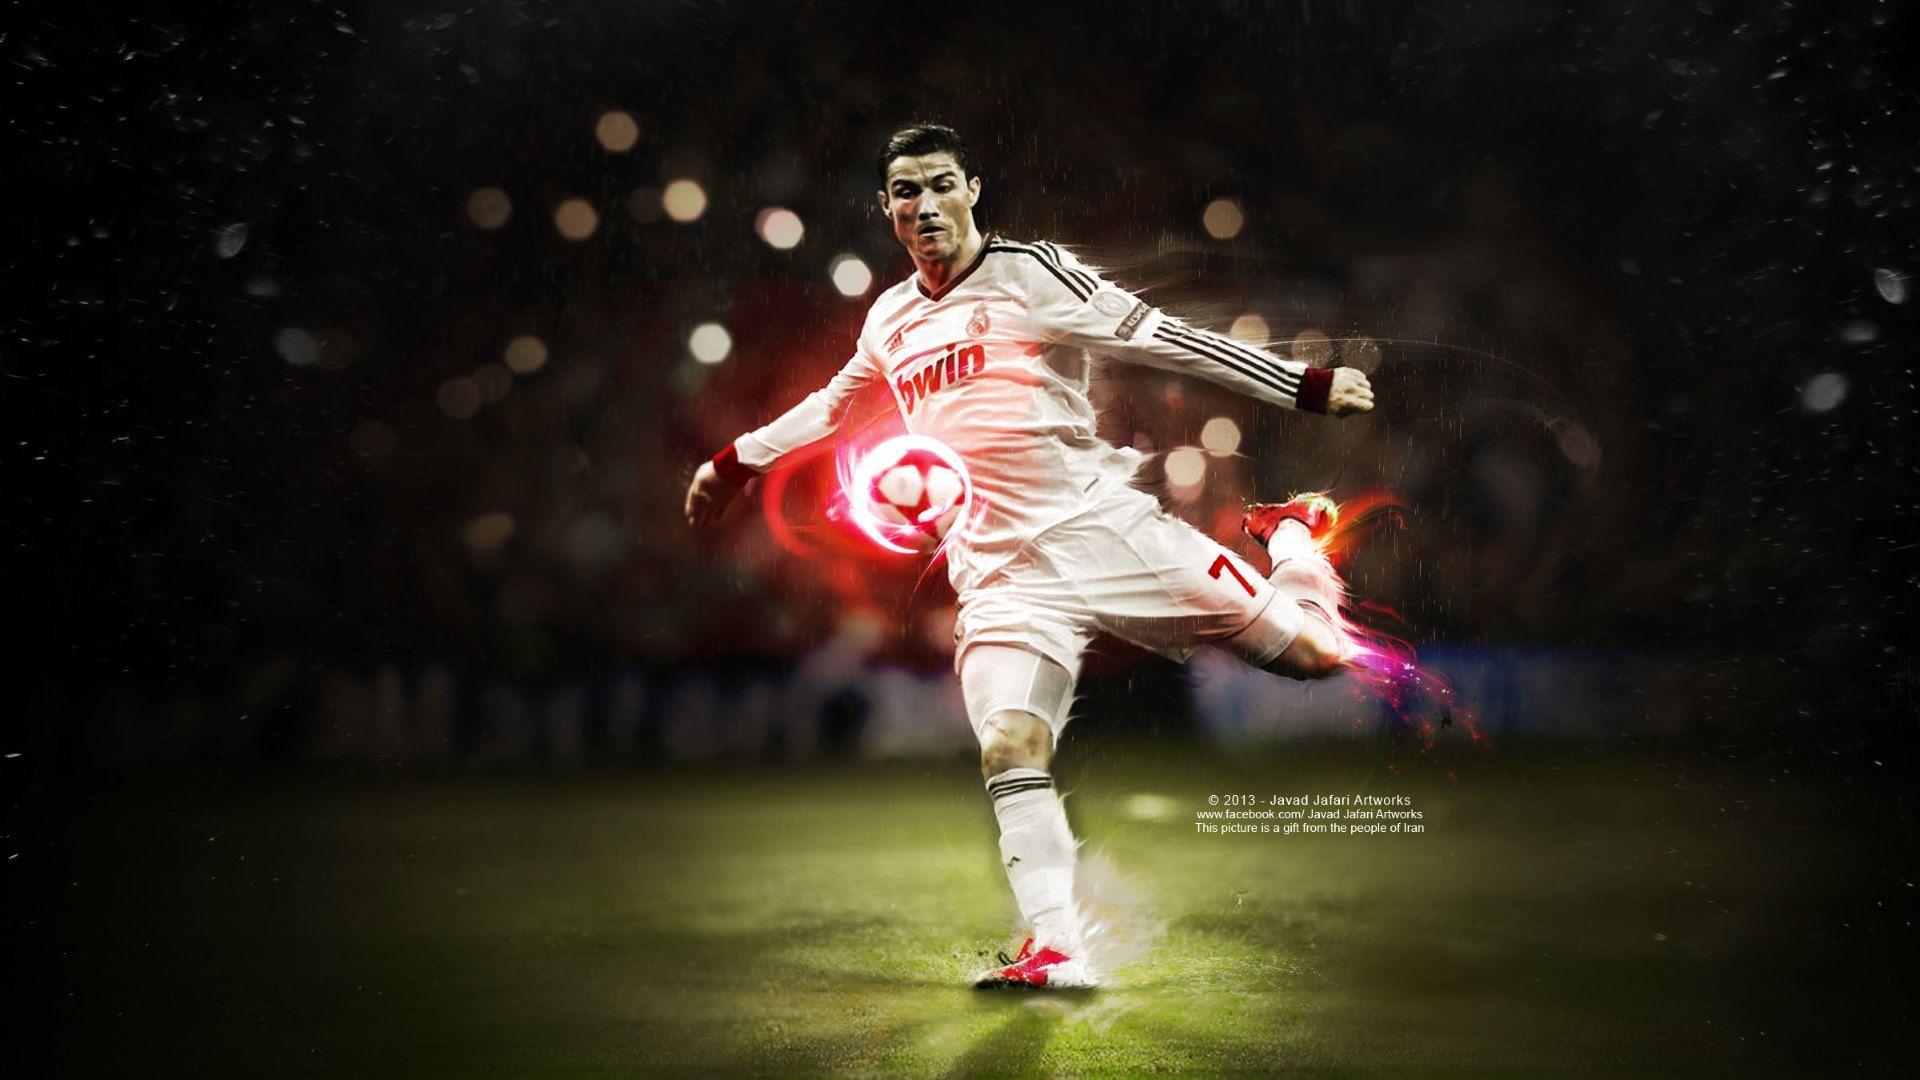 Ronaldo HD Wallpaper